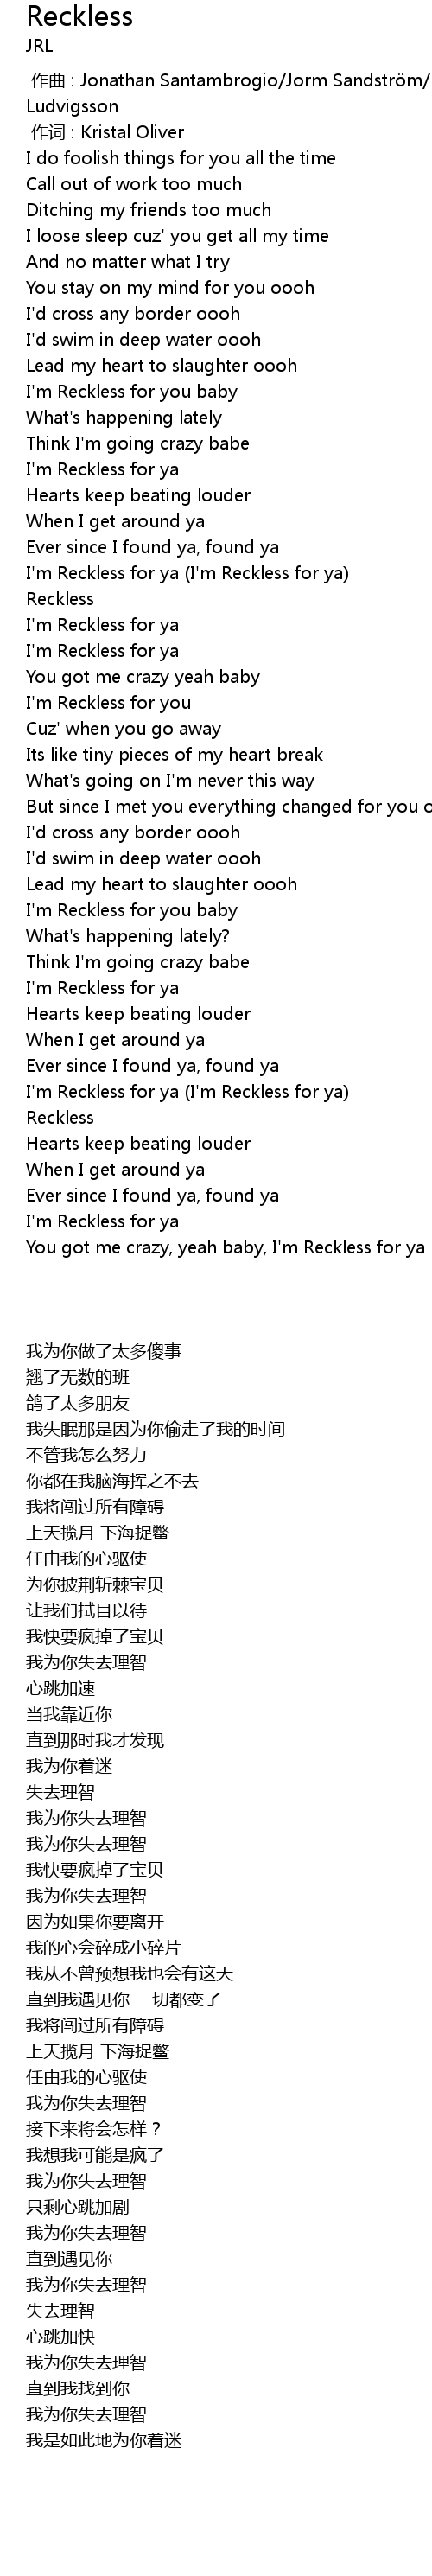 Lyrics reckless